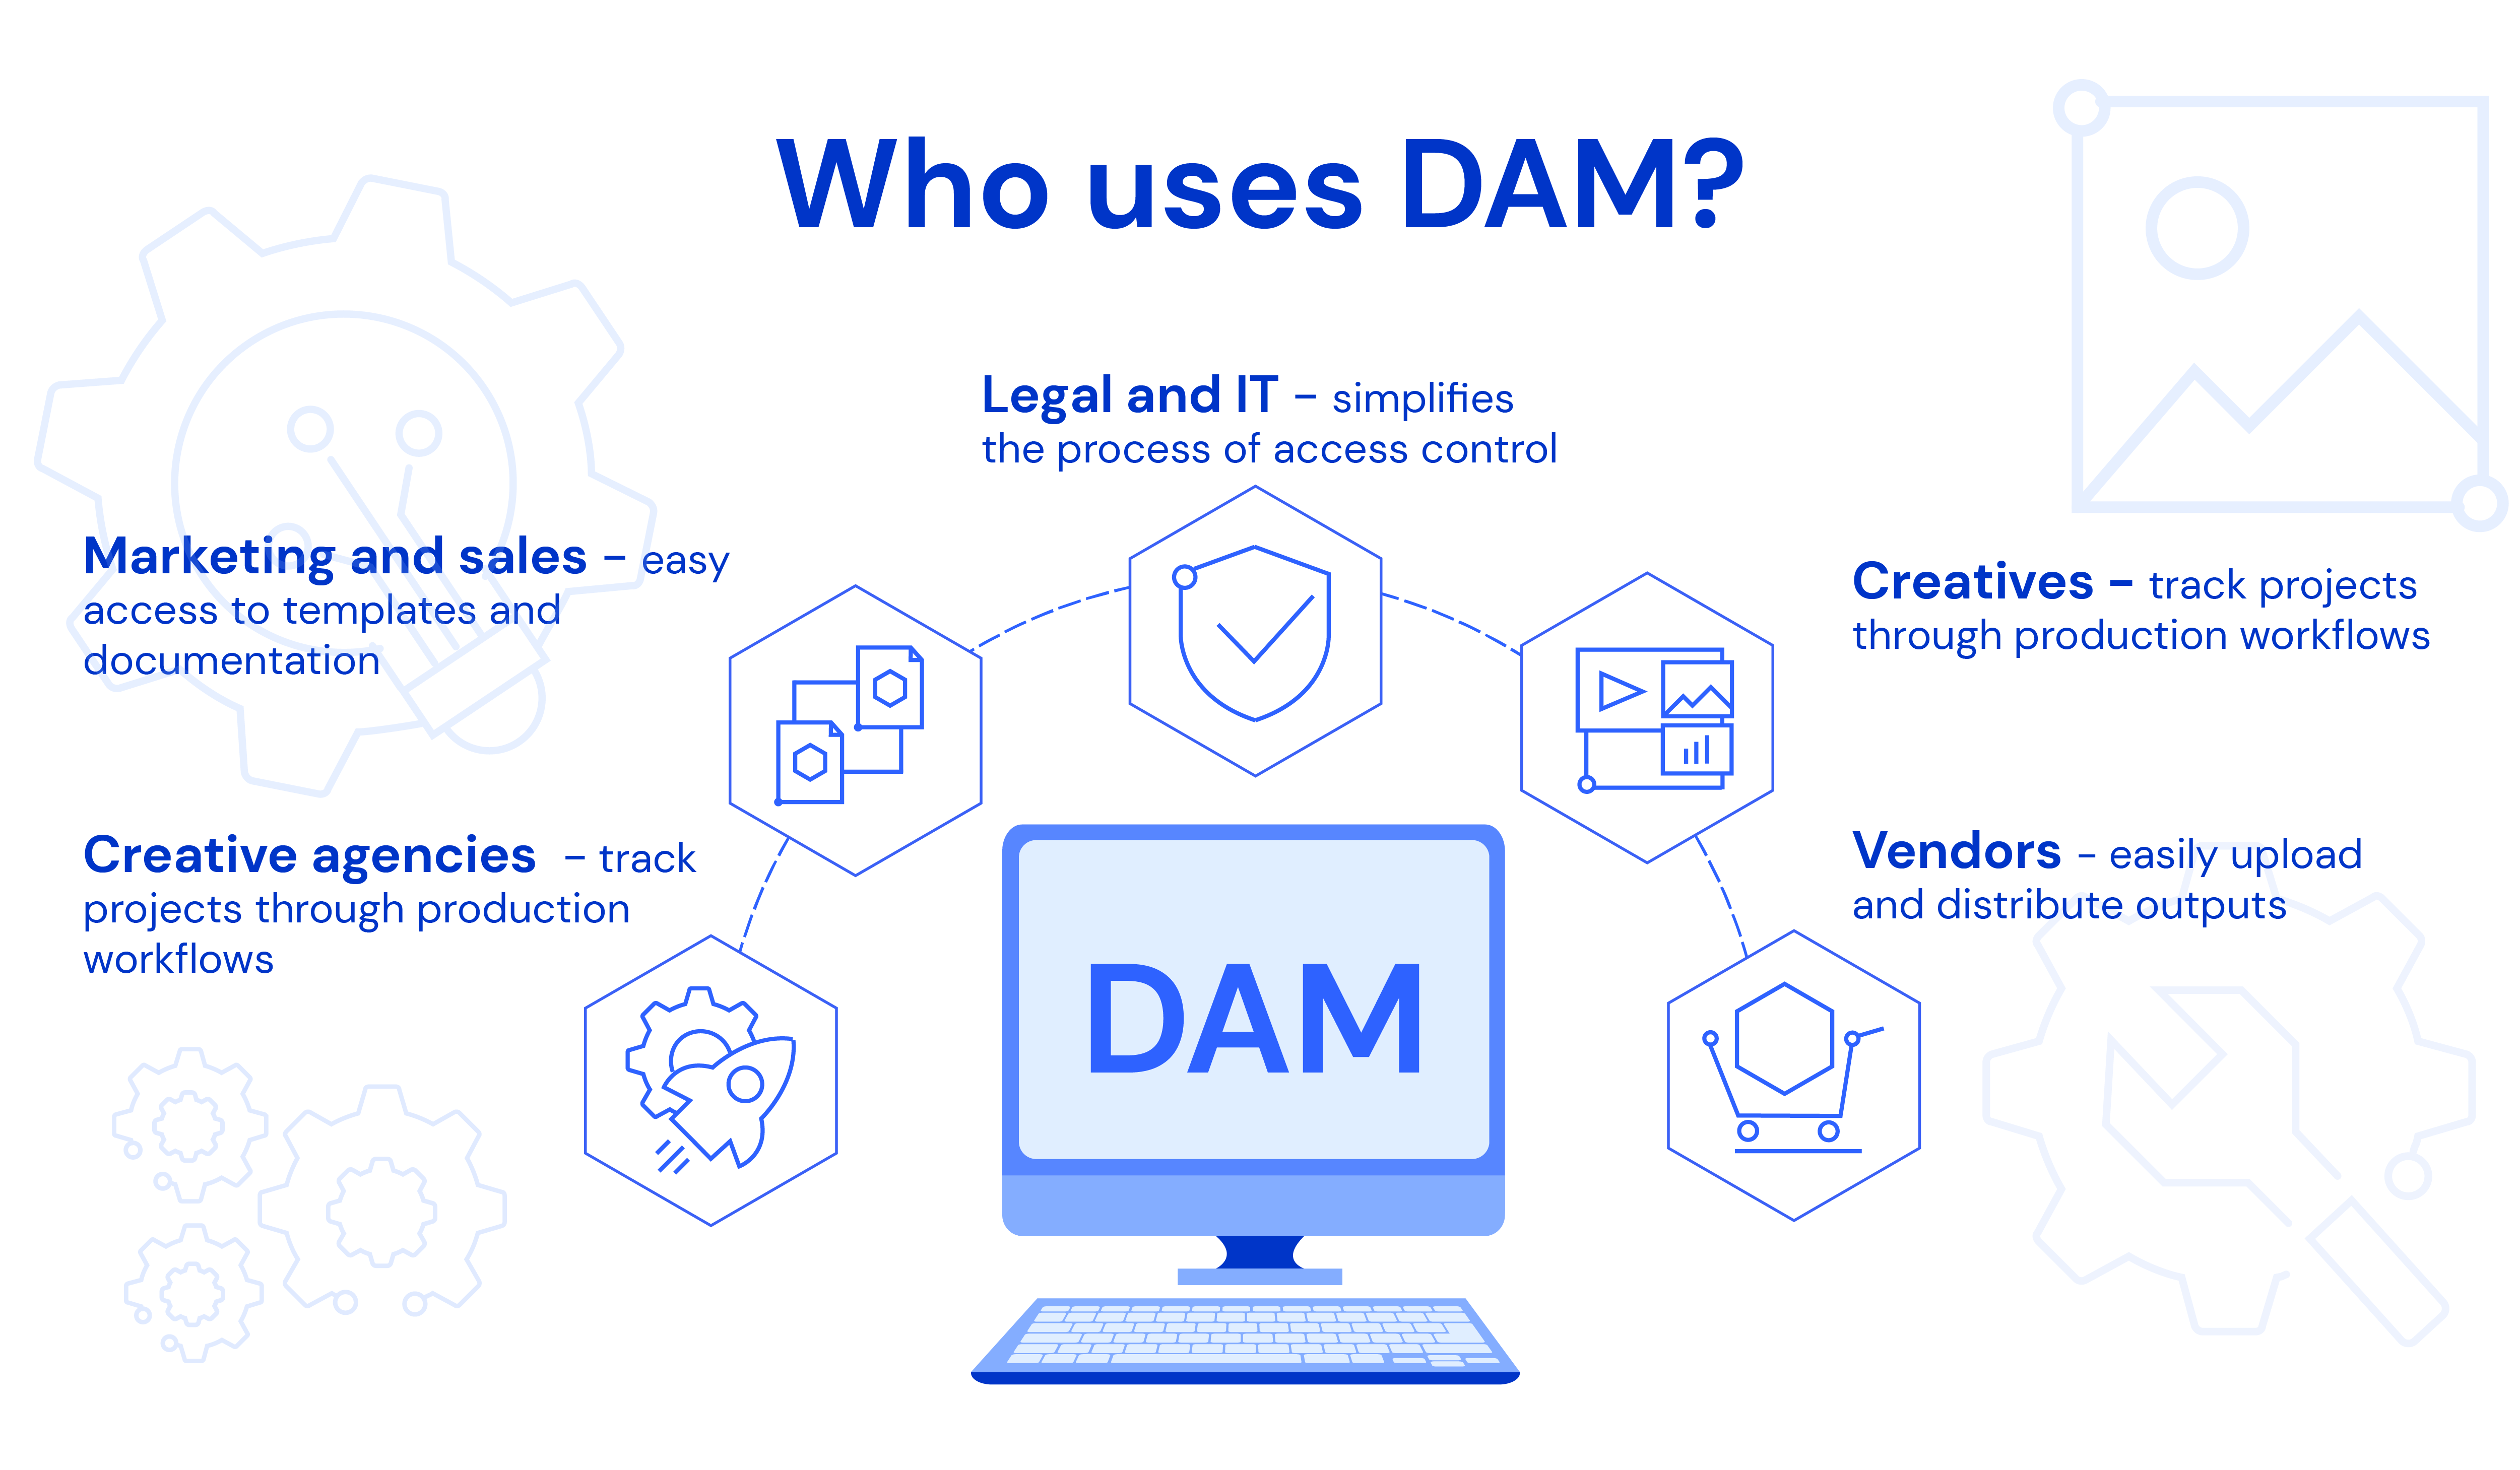 Who uses a DAM